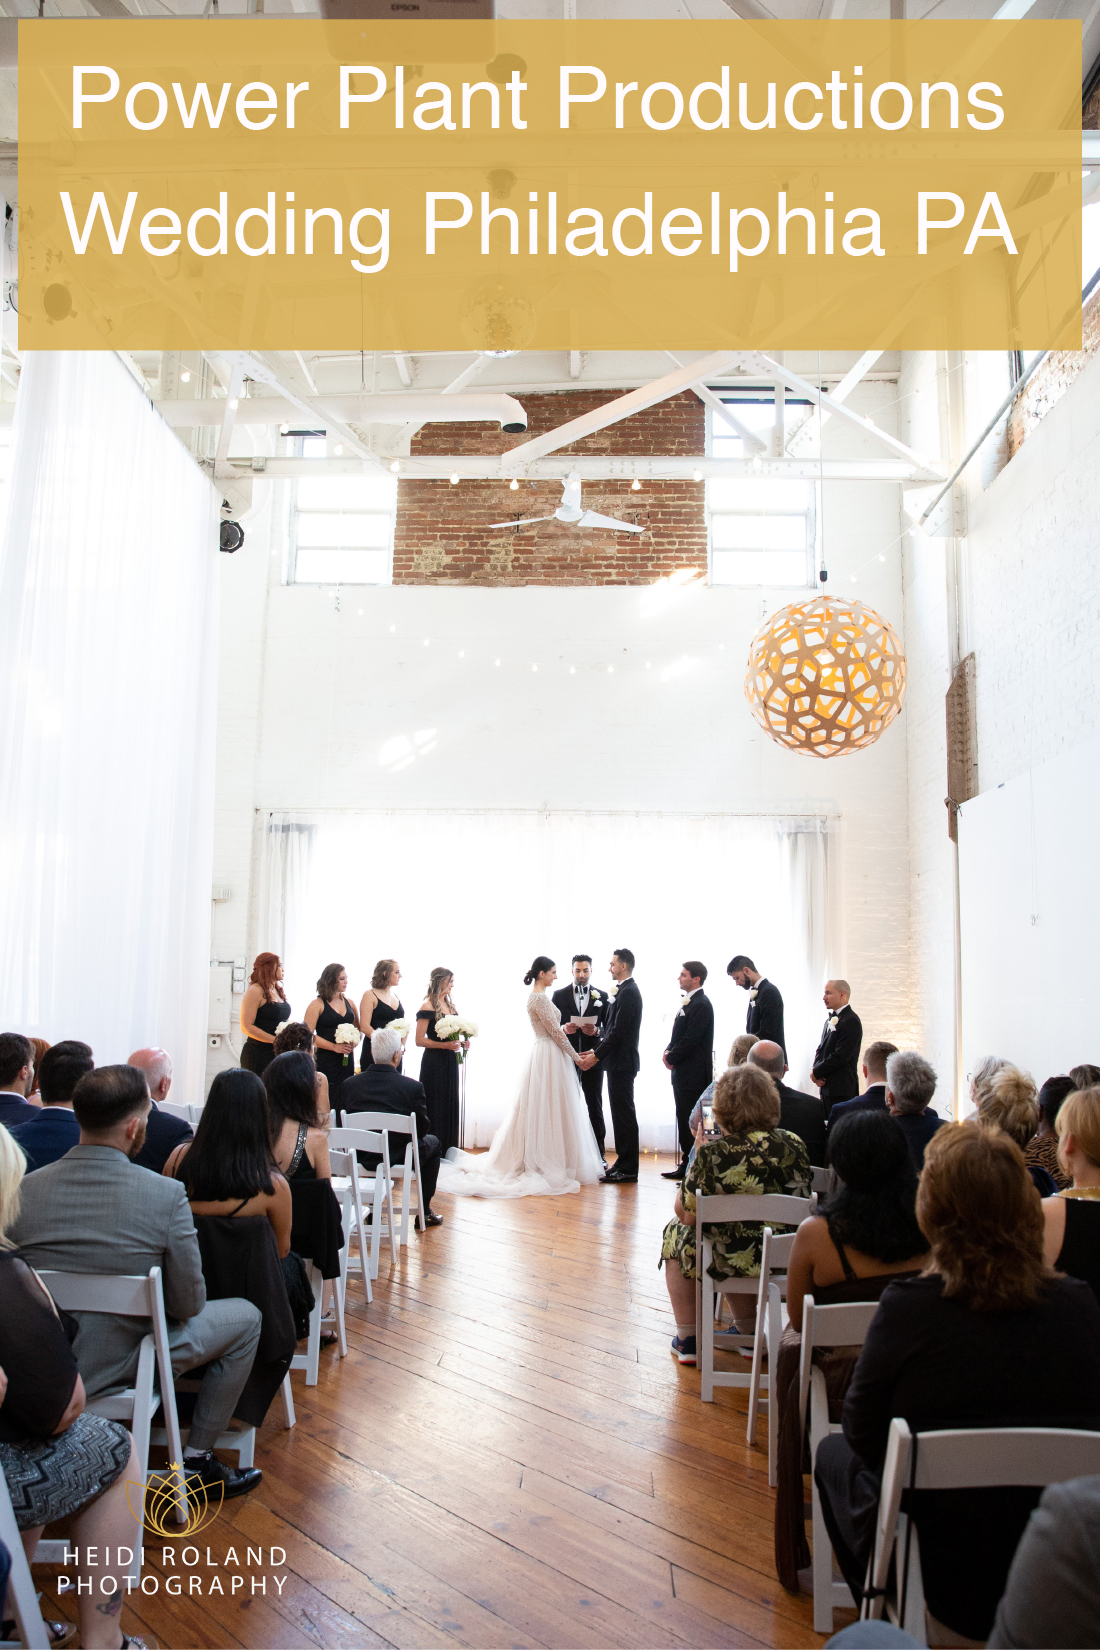 Power Plant Productions wedding ceremony Philadelphia PA by Heidi Roland Photography